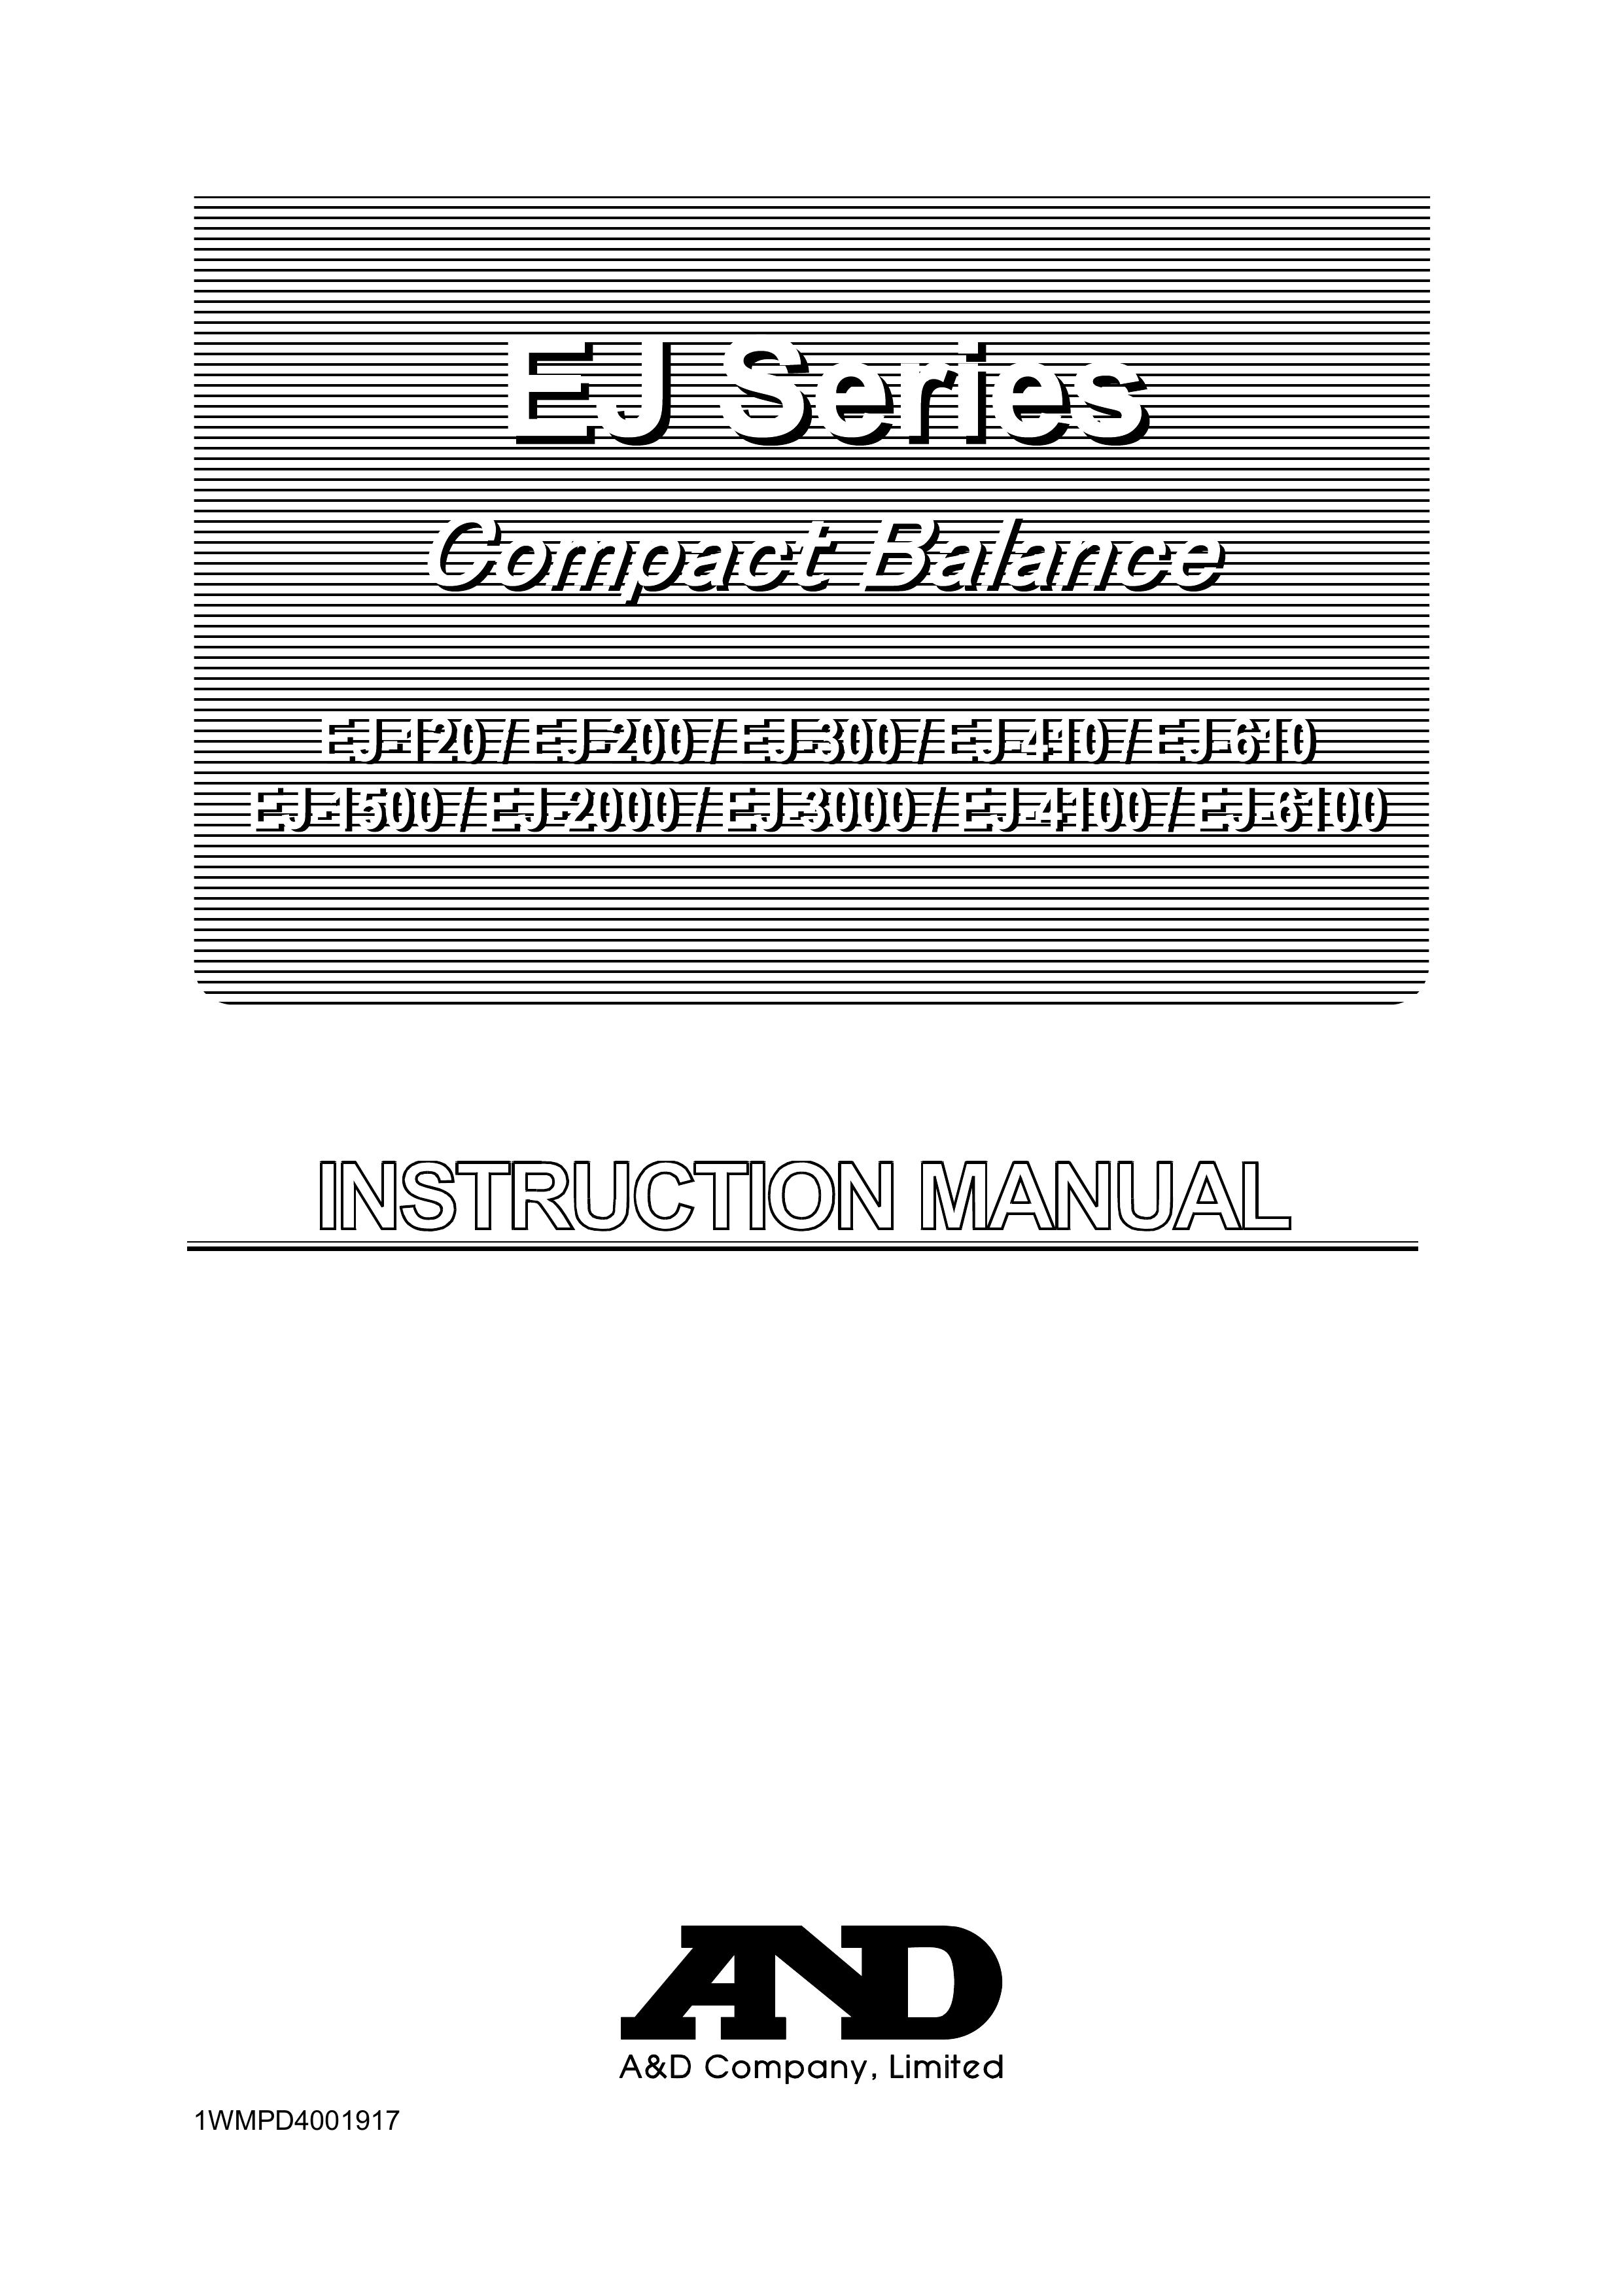 A&D EJ-120 Scale User Manual